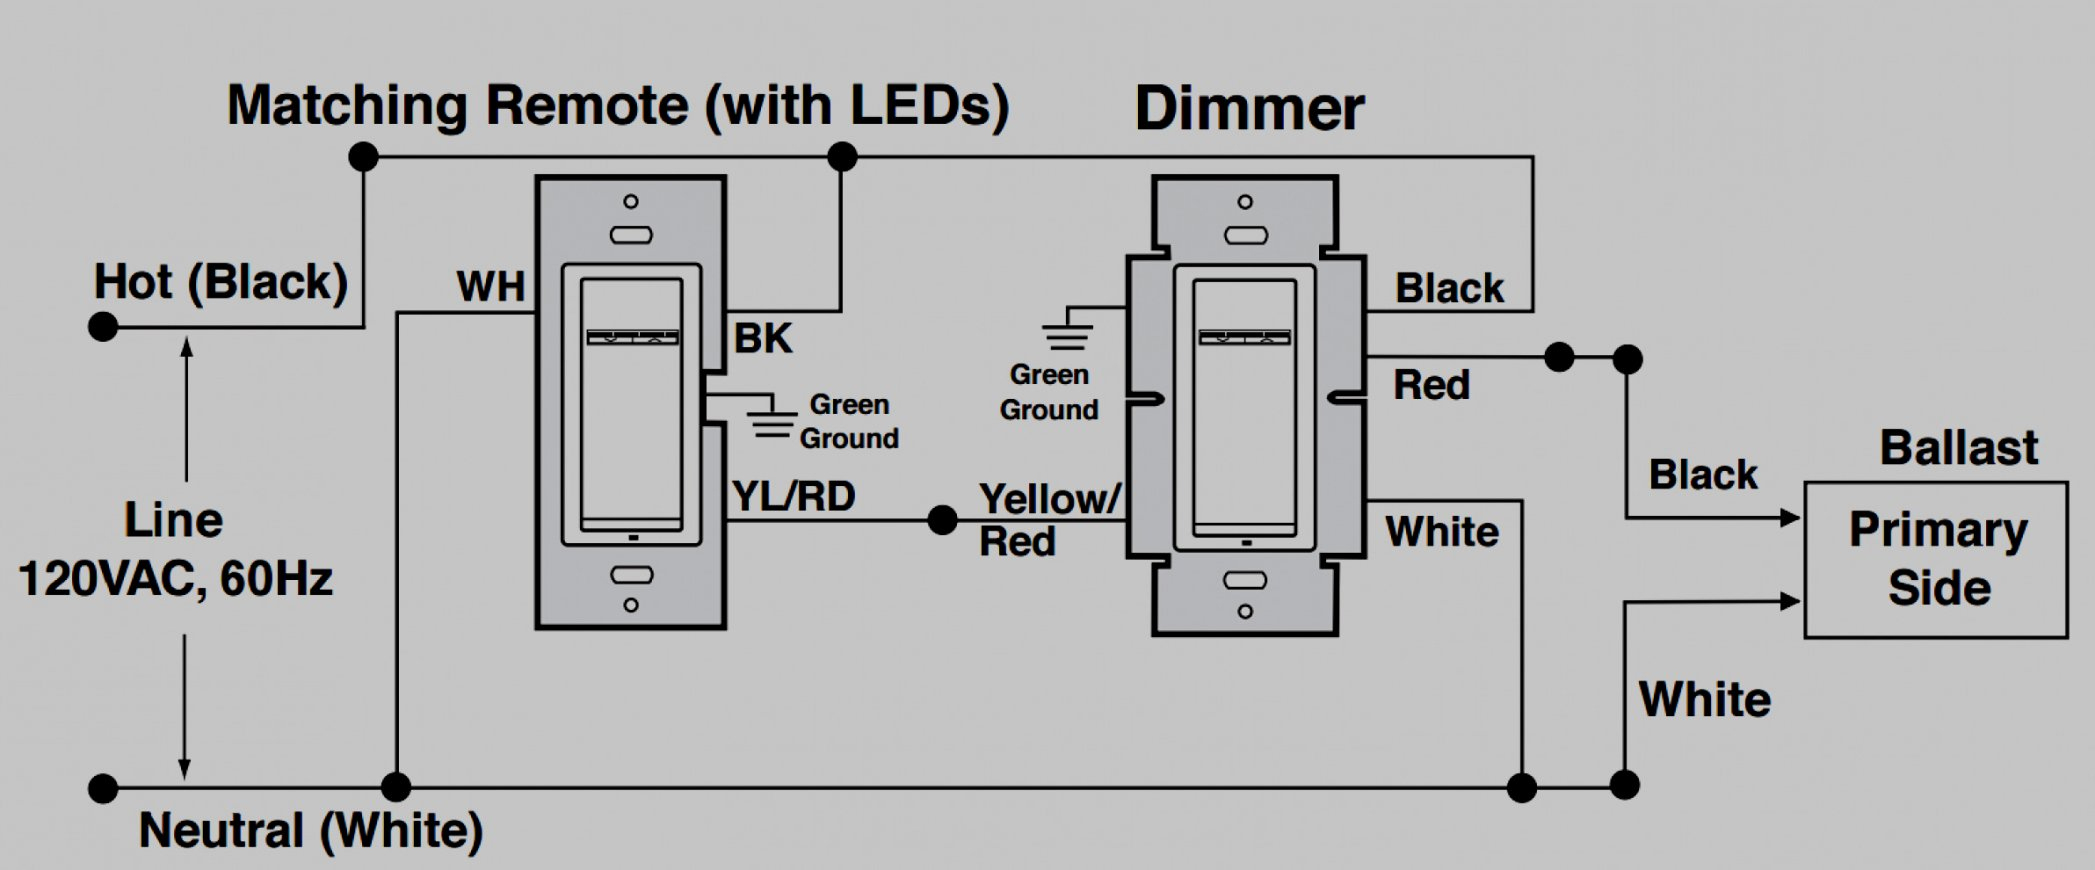 Dimmer Wiring Diagram | Wiring Diagram - Lutron Dimmer Wiring Diagram